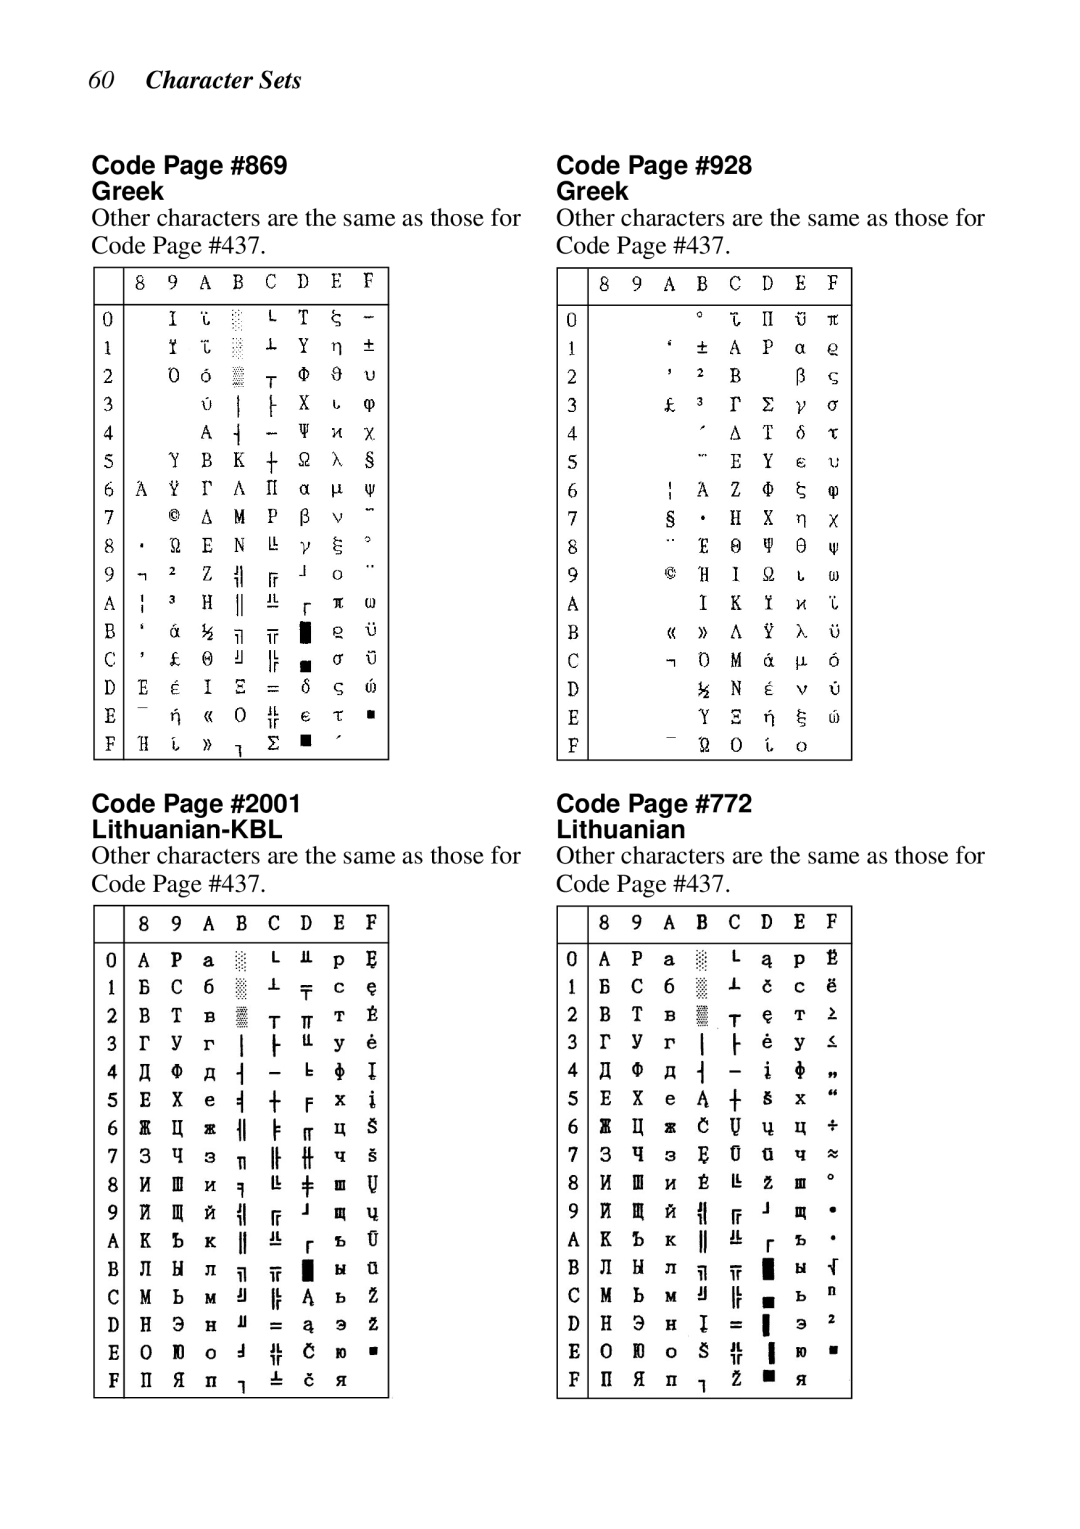 Star Micronics LC-8021 manual Character Sets, Code Page #869 Greek, Code Page #2001 Lithuanian-KBL, Code Page #928 Greek 